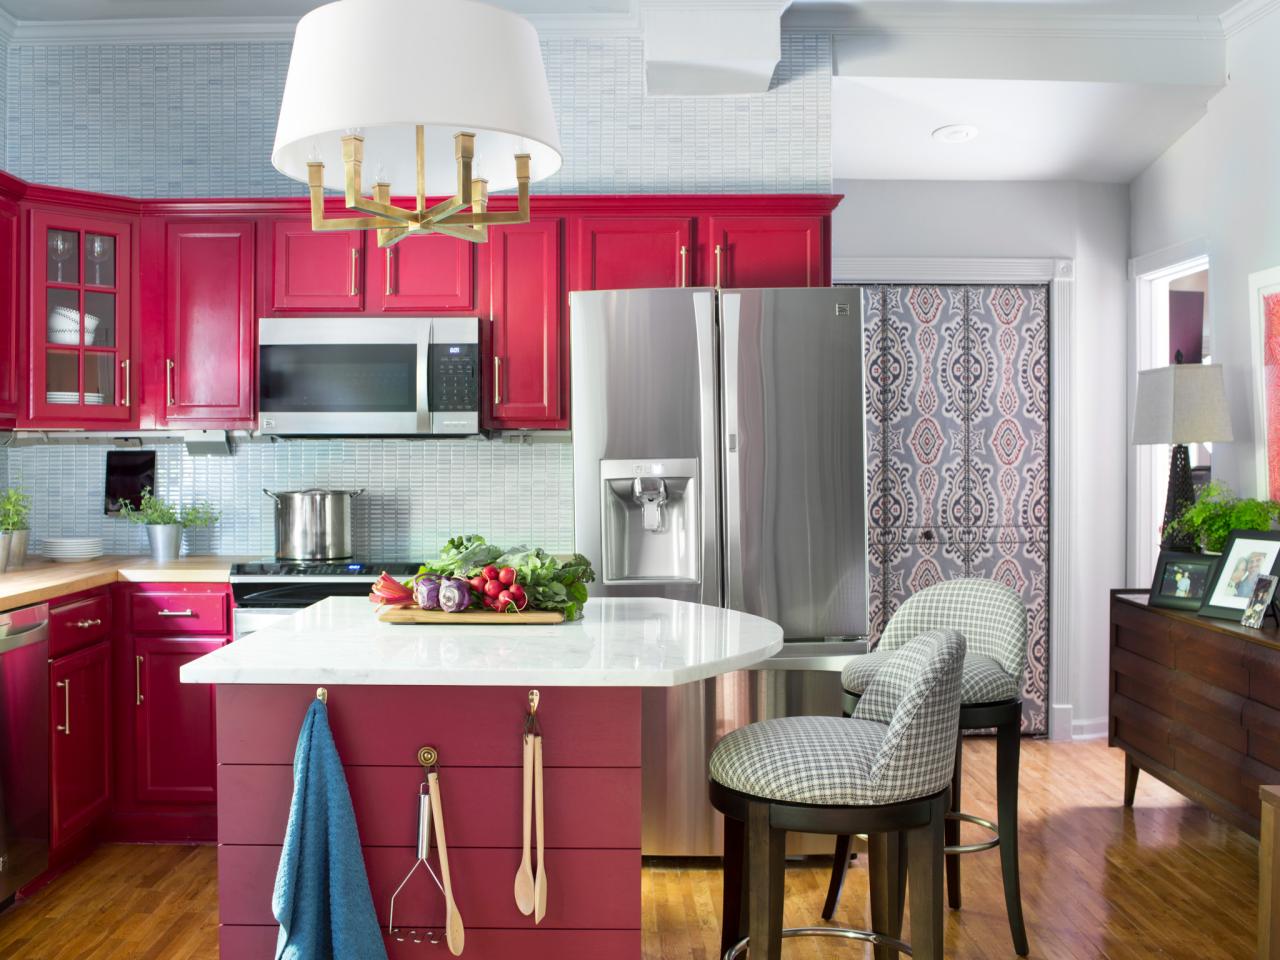 9 kitchen color ideas that aren't white | hgtv's